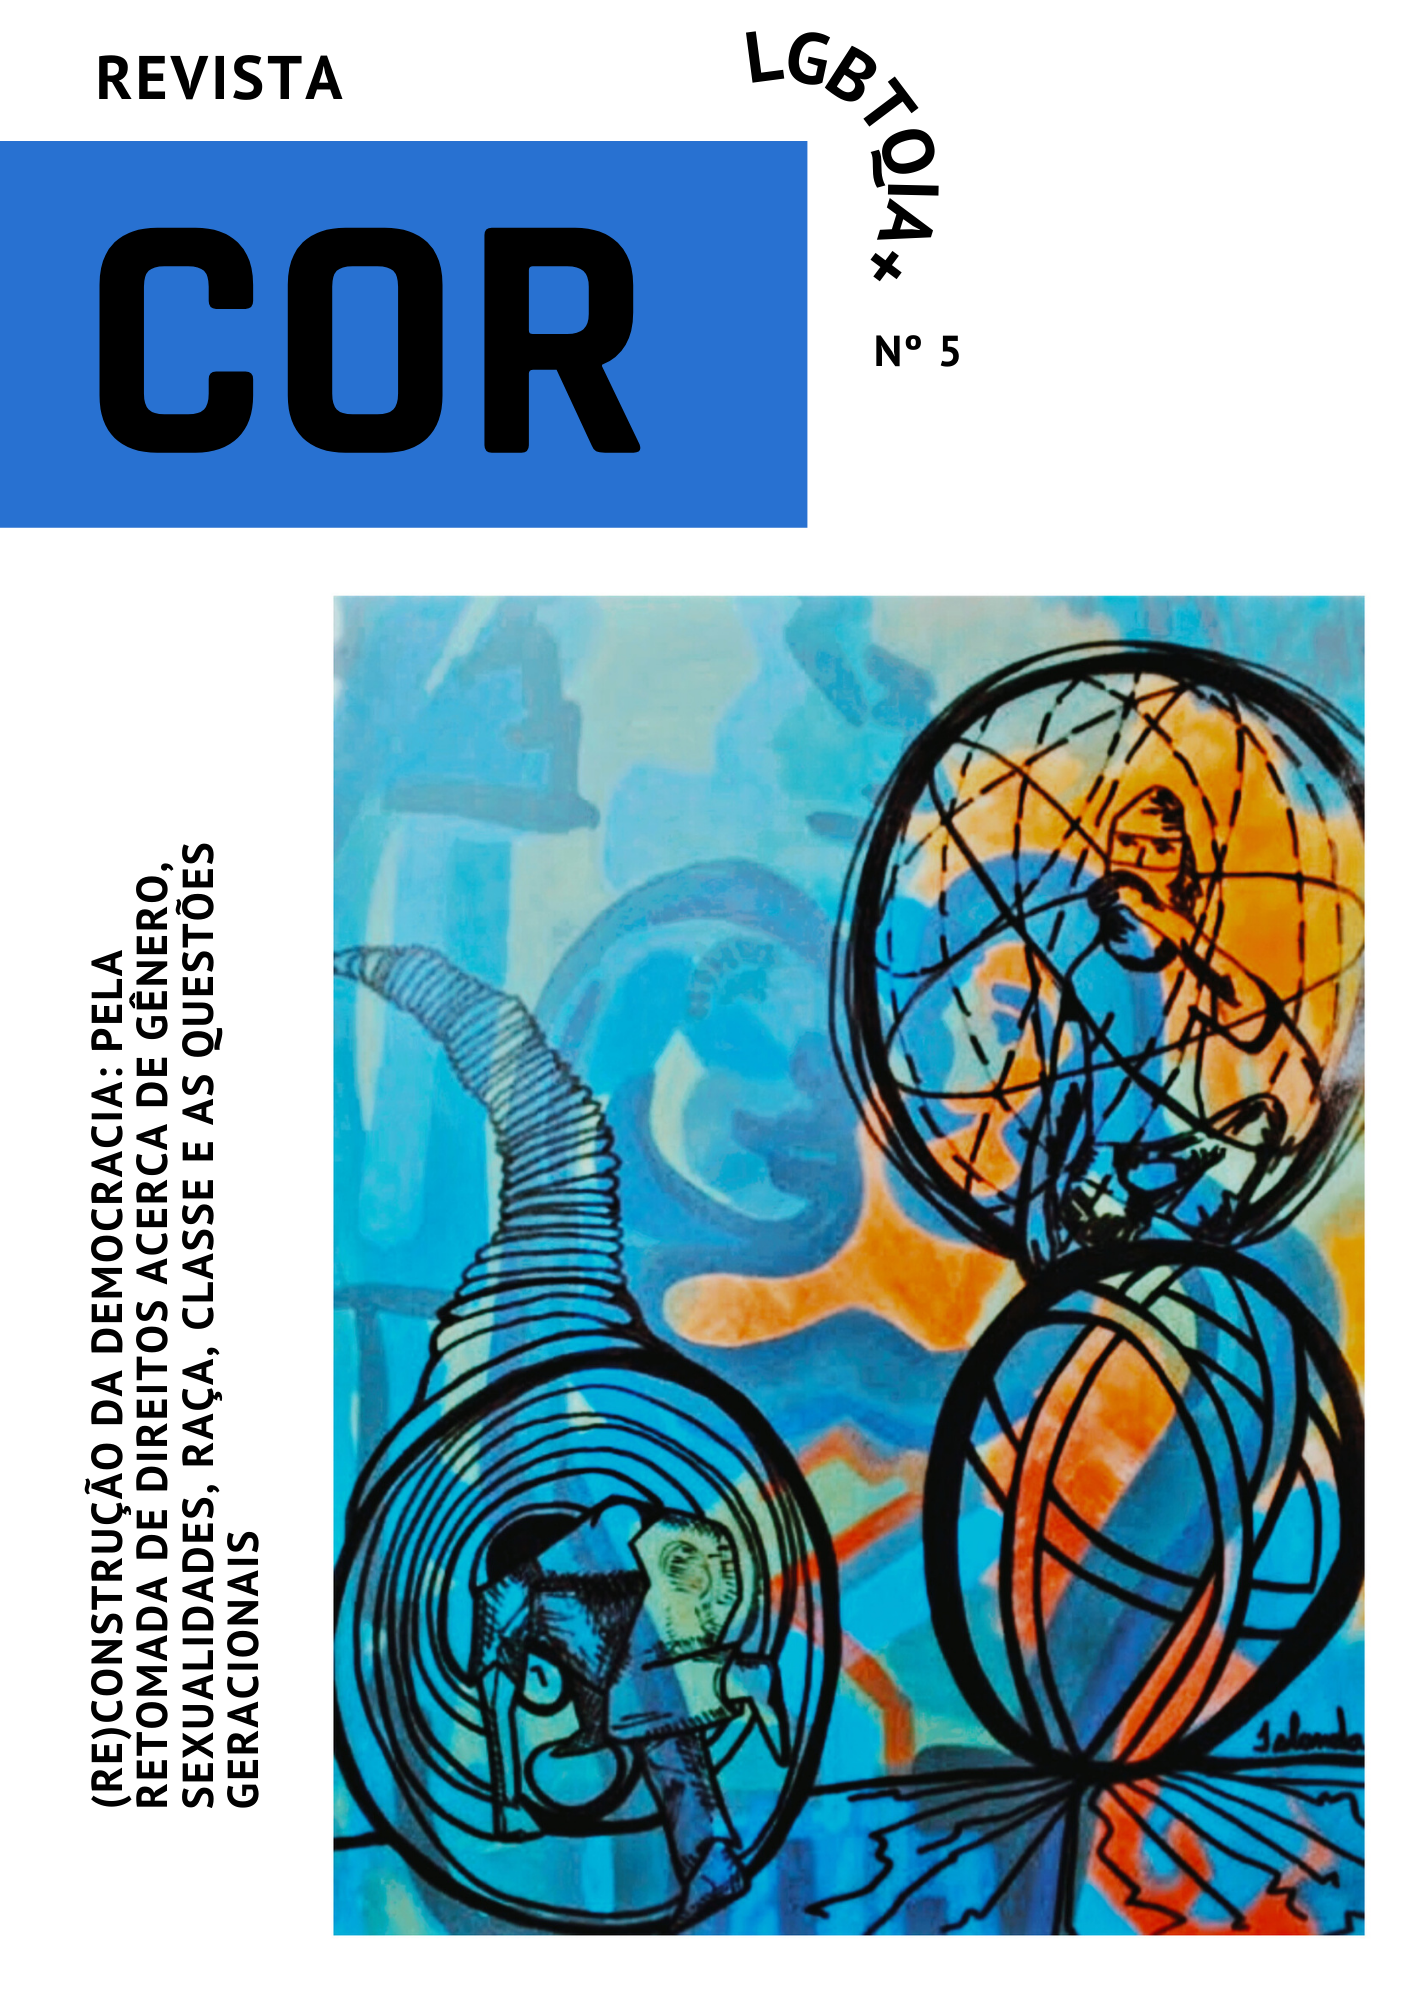 Revista COR LGBTQIA+, Curitiba, v. 1, n. 3, jul. 2022 by corlgbtqia - Issuu